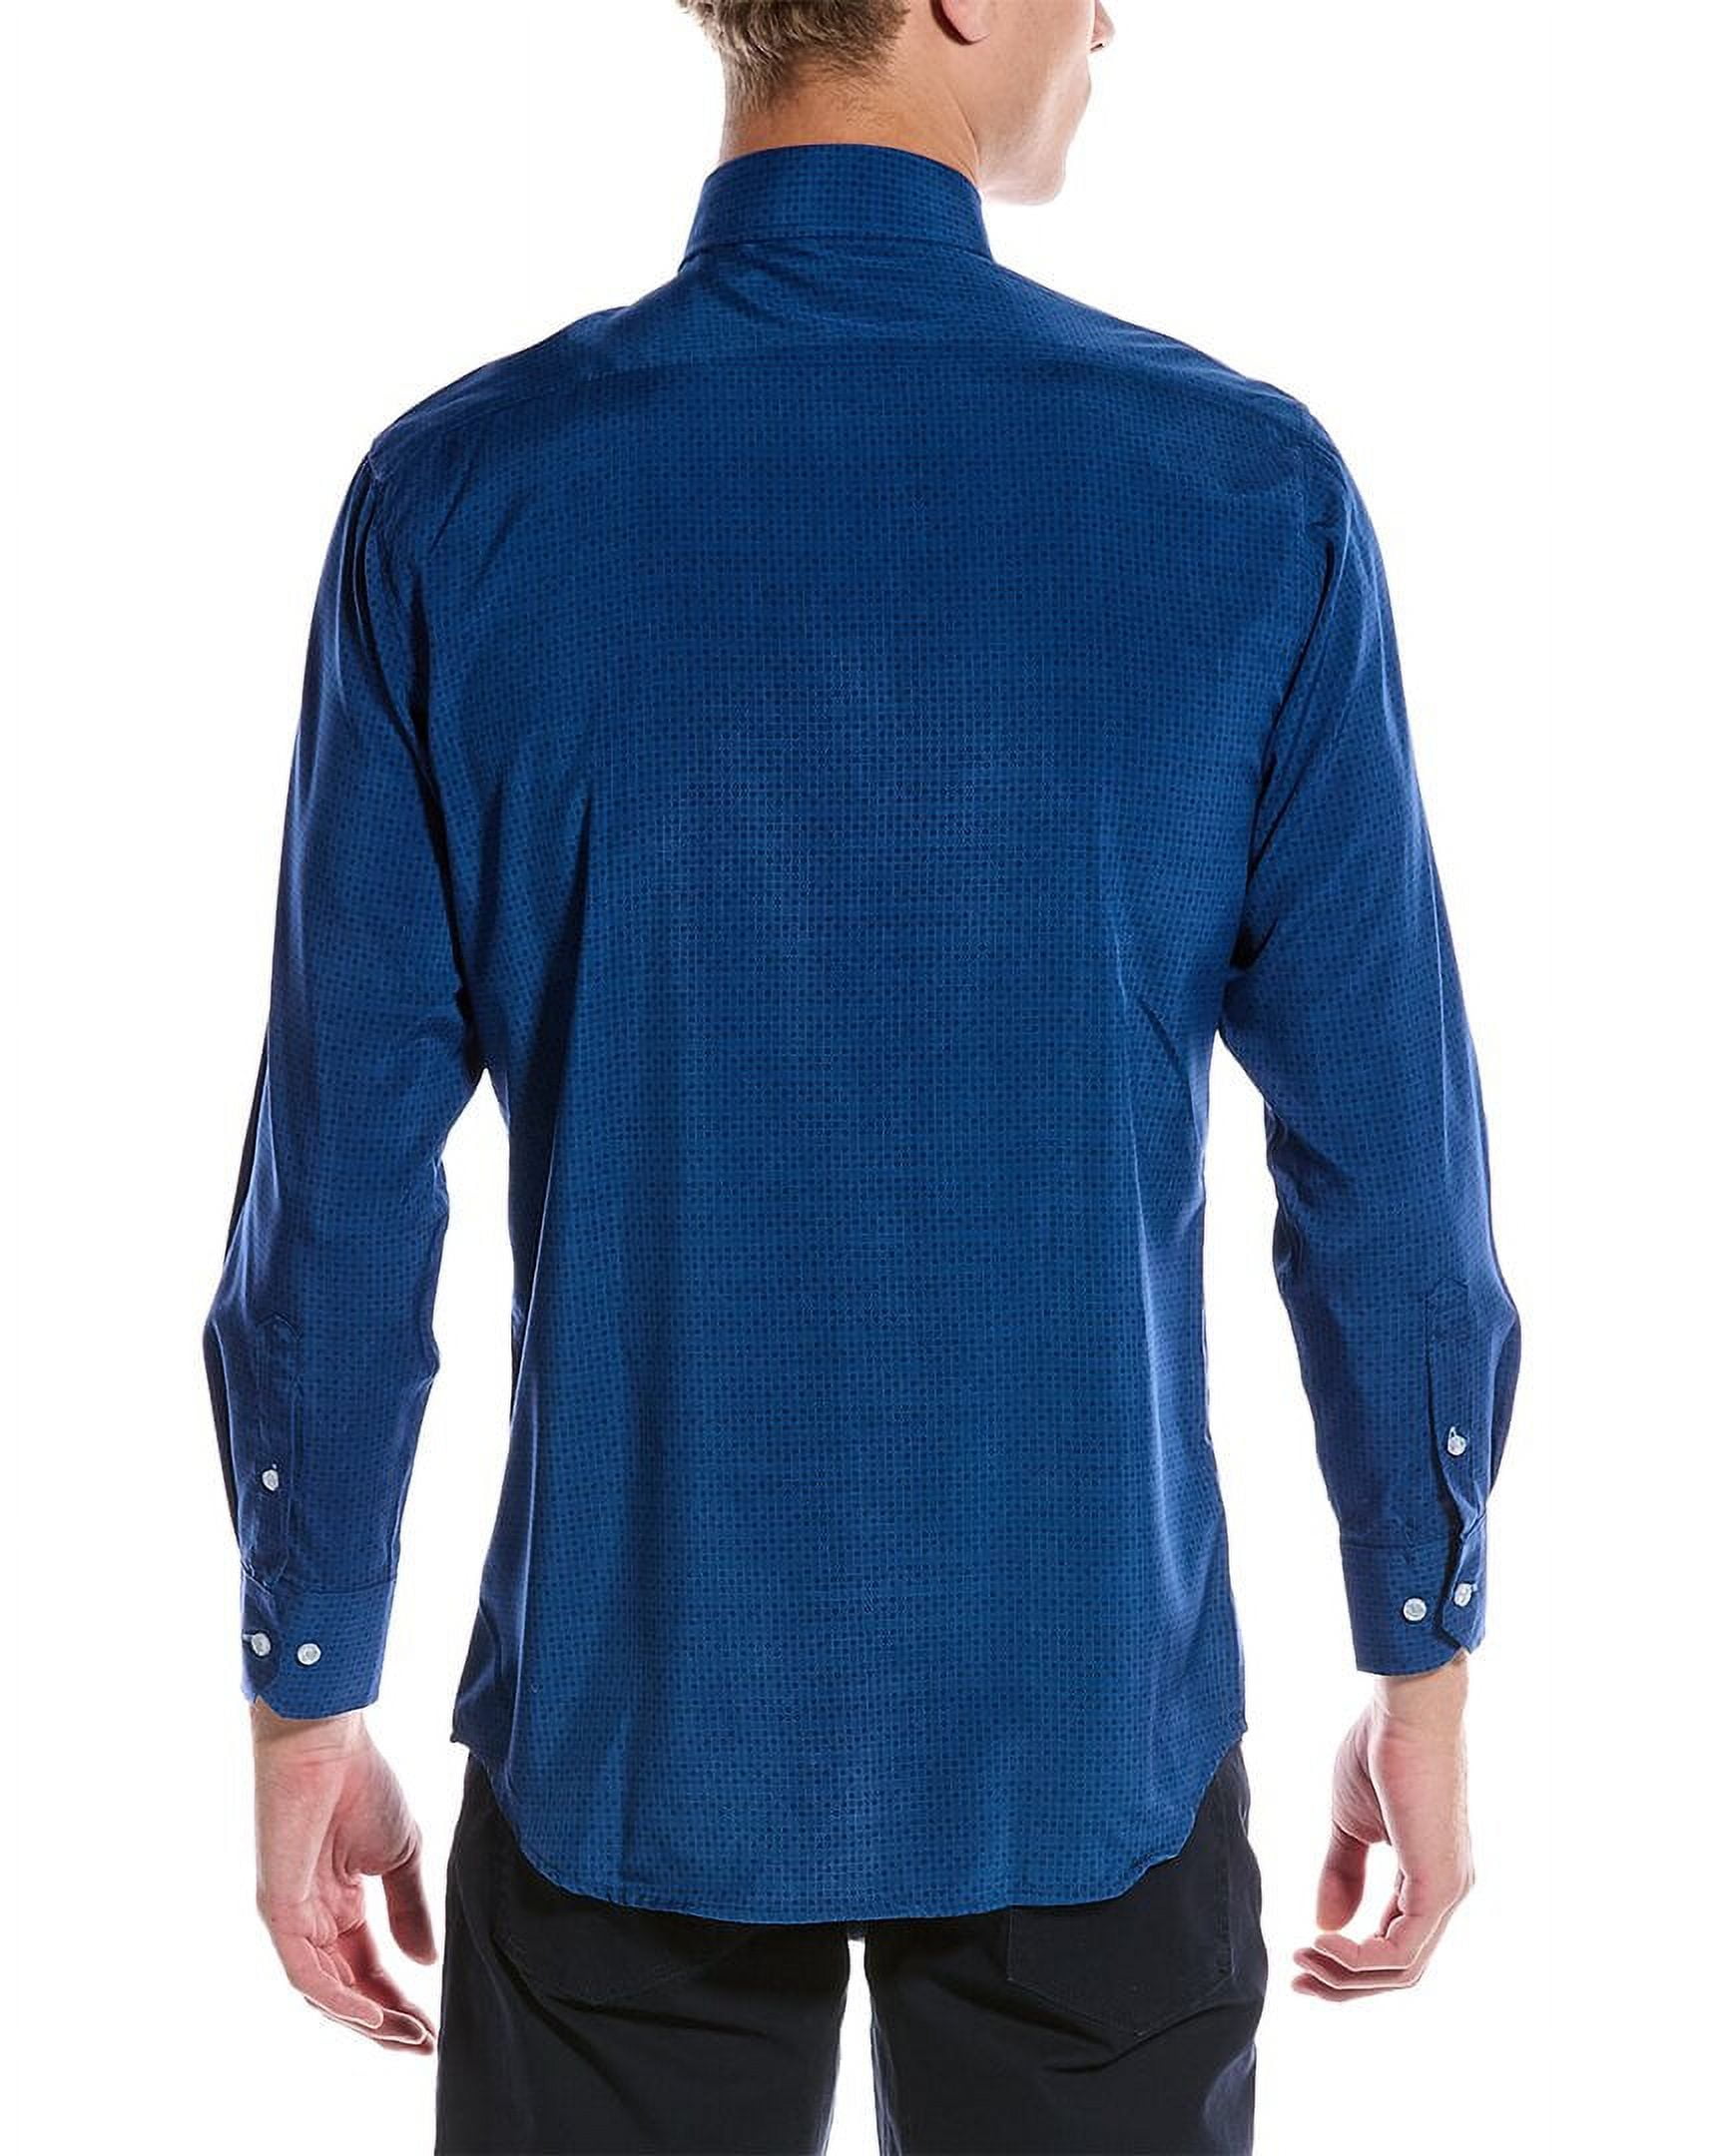 Pdbokew Men's Sun Protection Fishing Shirts Long Sleeve Travel Work Shirts  for Men UPF50+ Button Down Shirts with Zipper Pockets Mist Blue XL